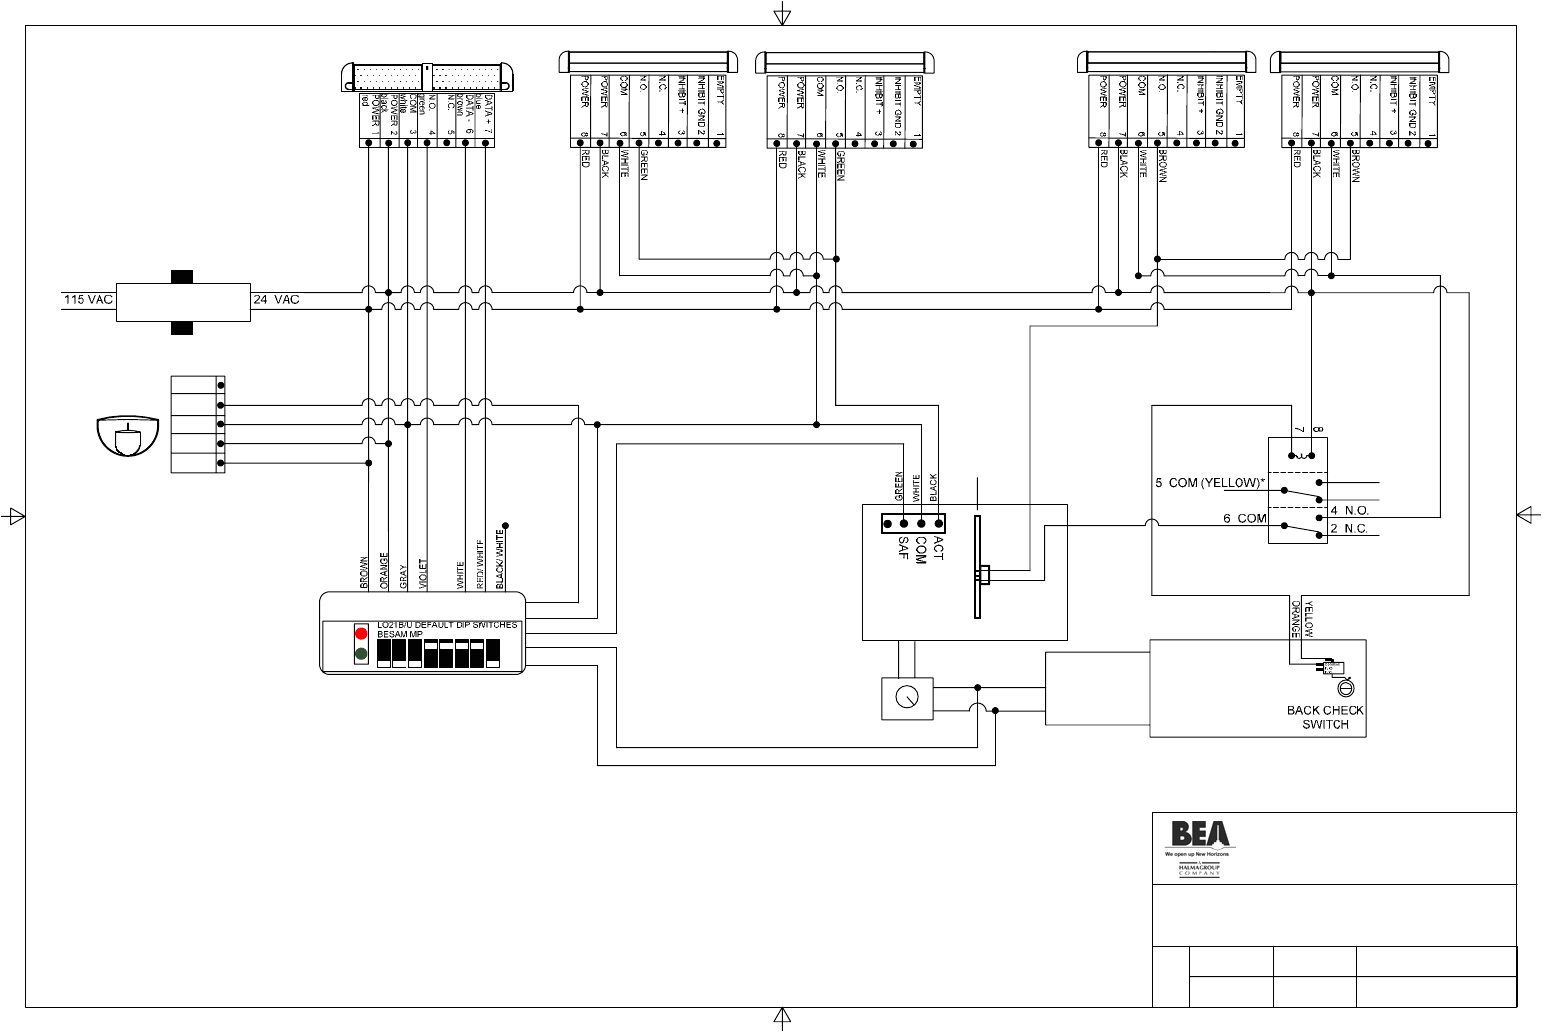 horton c2150 wiring diagram webtor me and fan coachedby in jpg